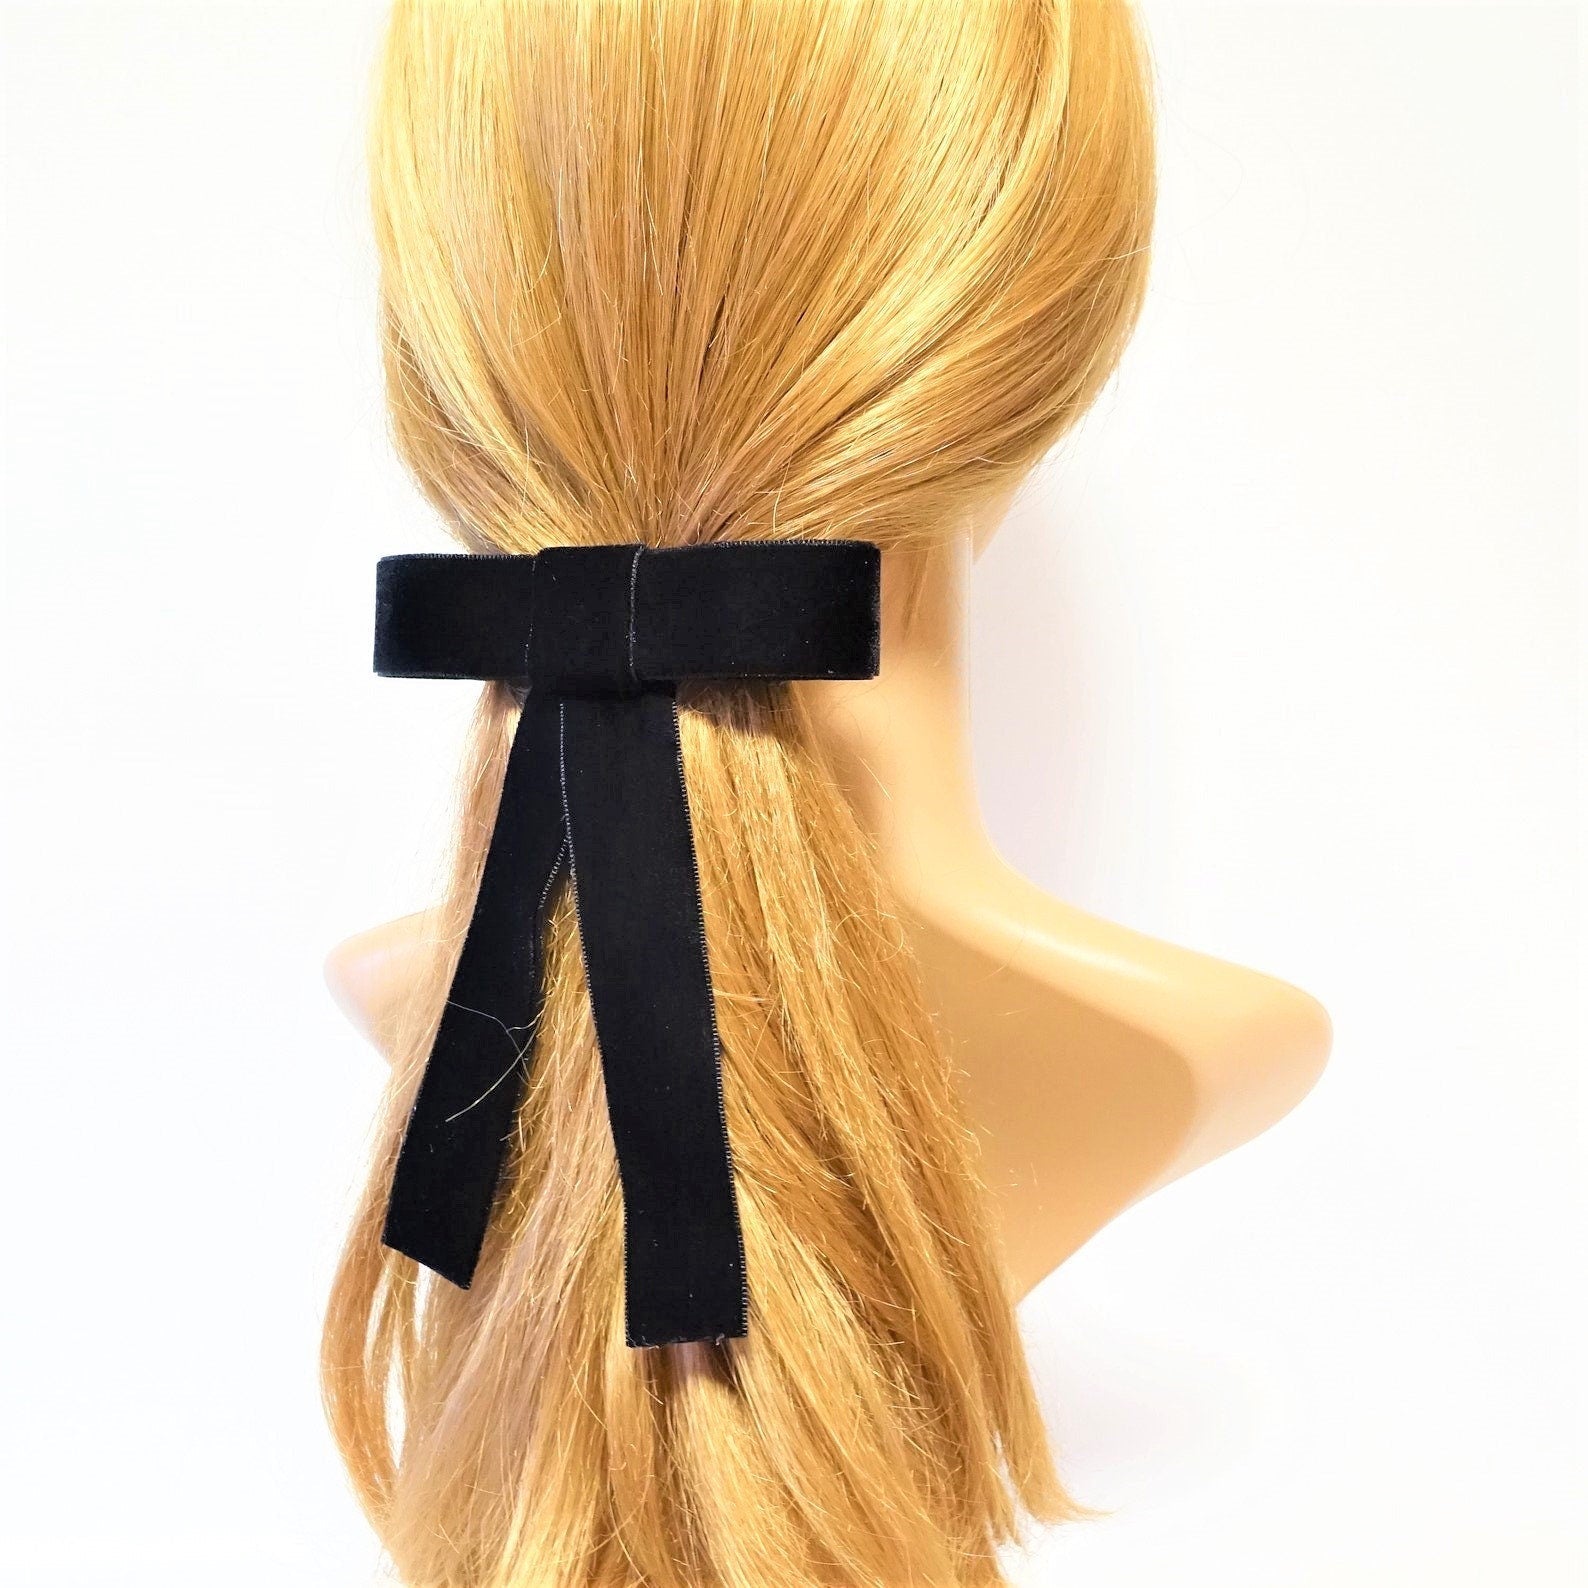 veryshine.com Simple velvet black bow hair accessory shop for women